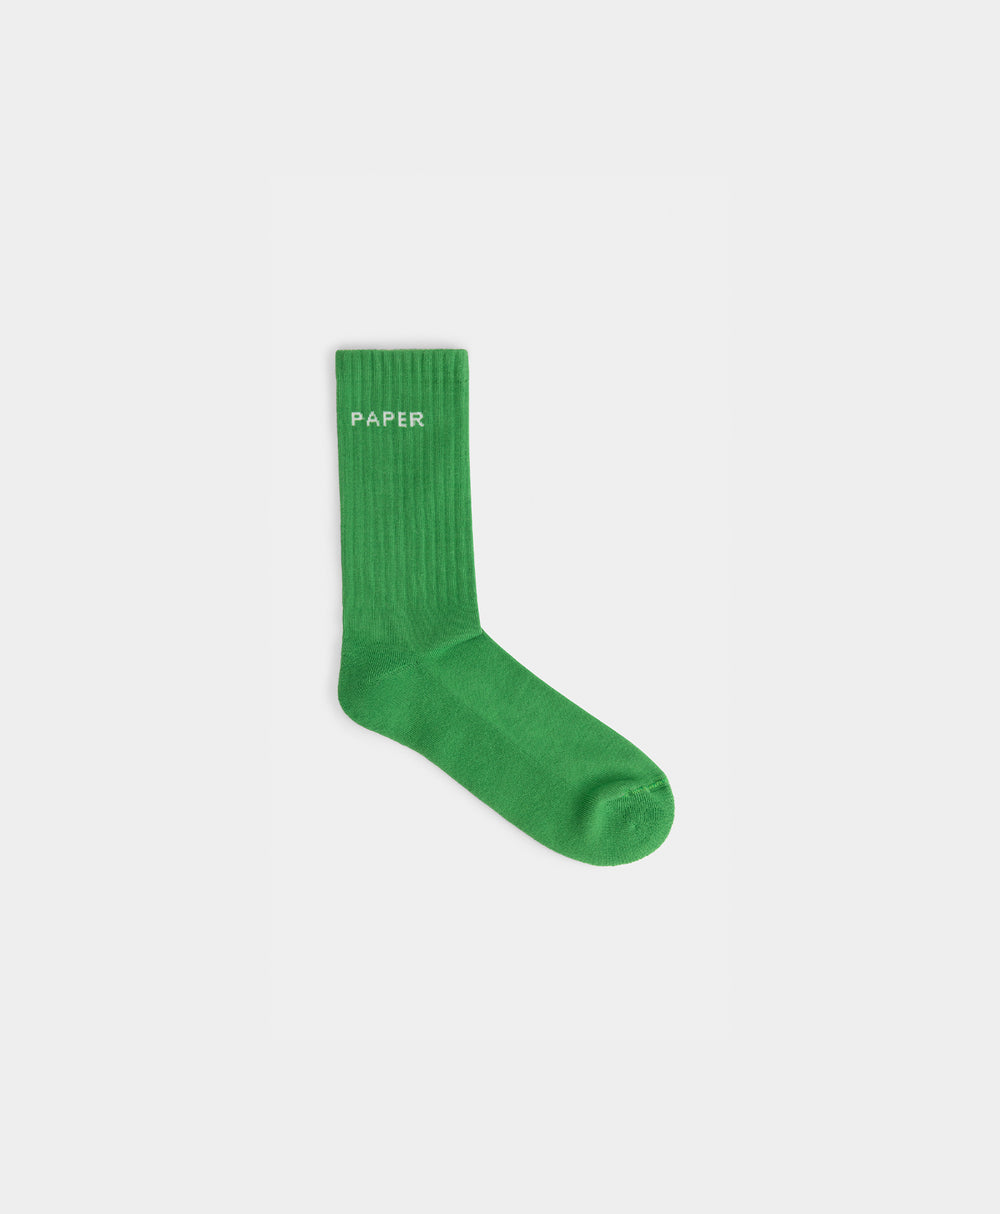 DP - Absinth Green Pra Socks - Packshot - Front